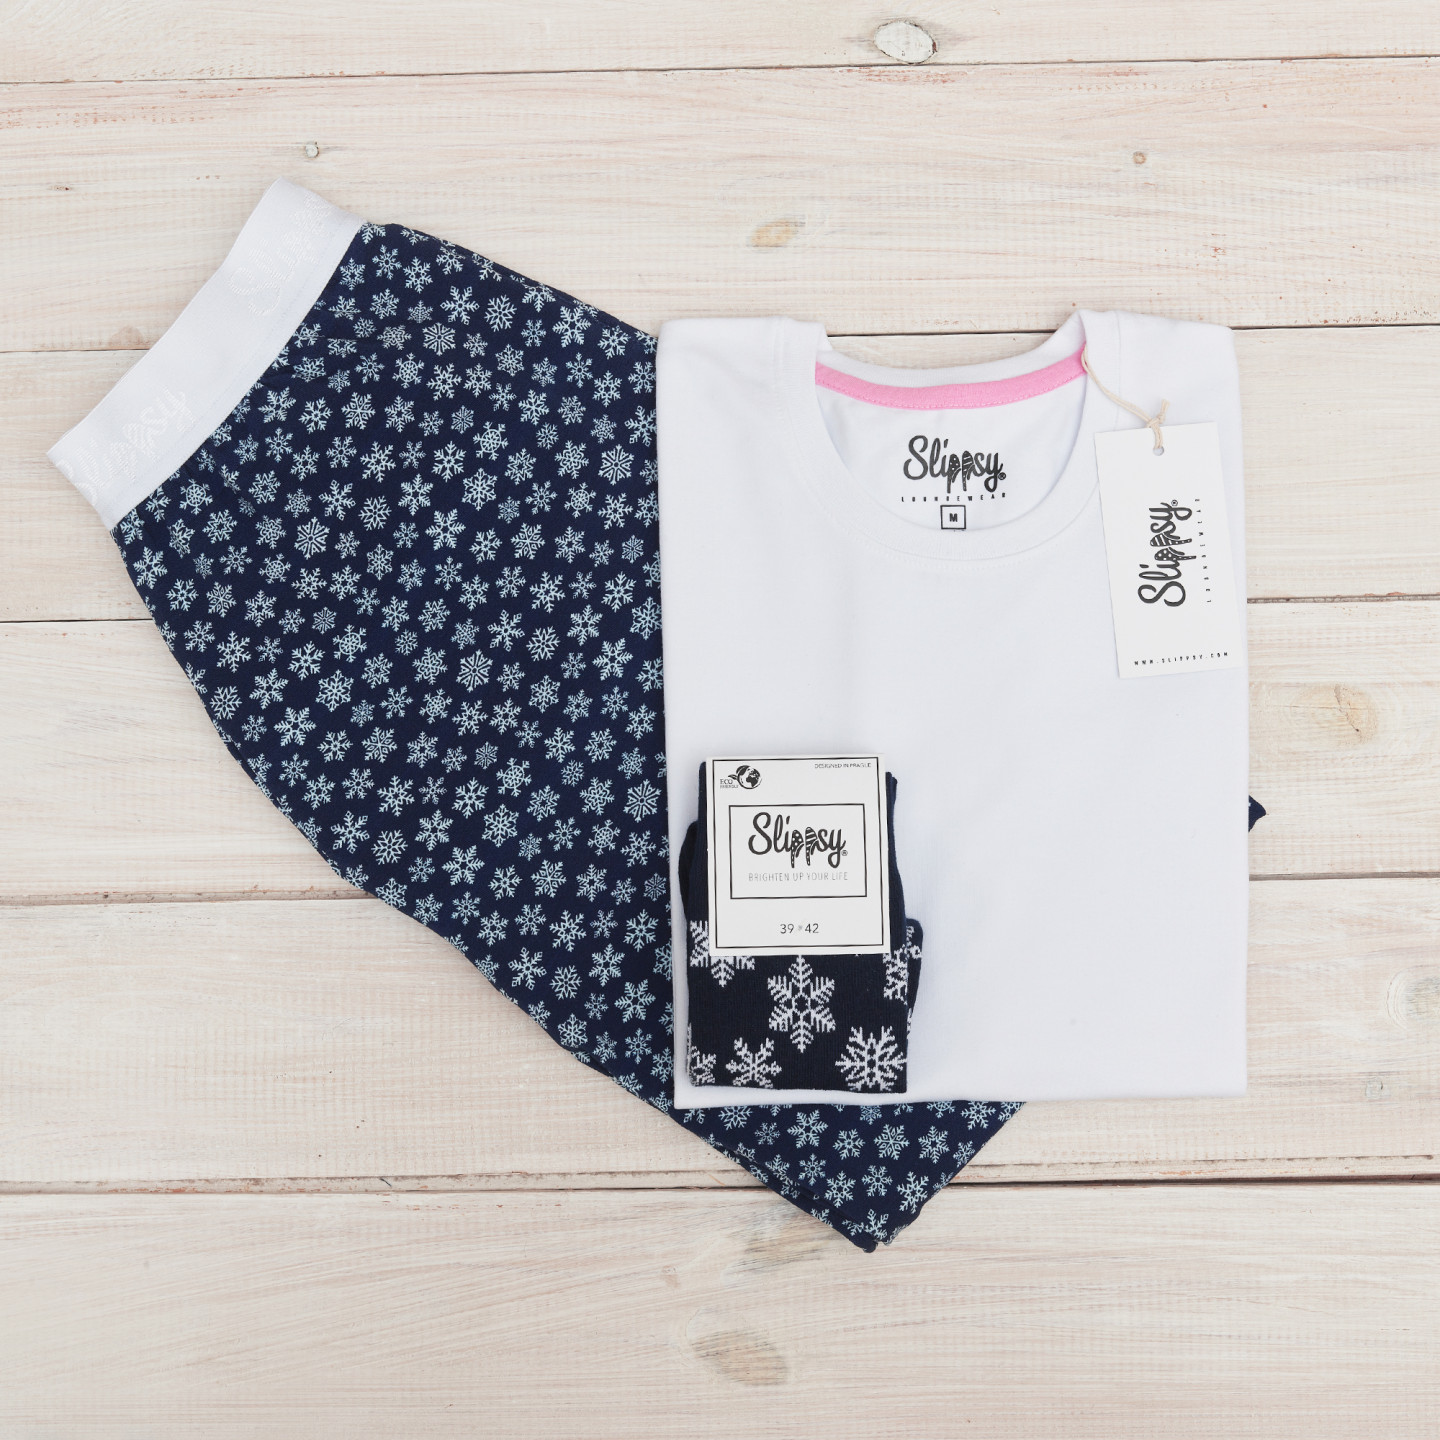 E-shop Slippsy Blue loungewear set girl